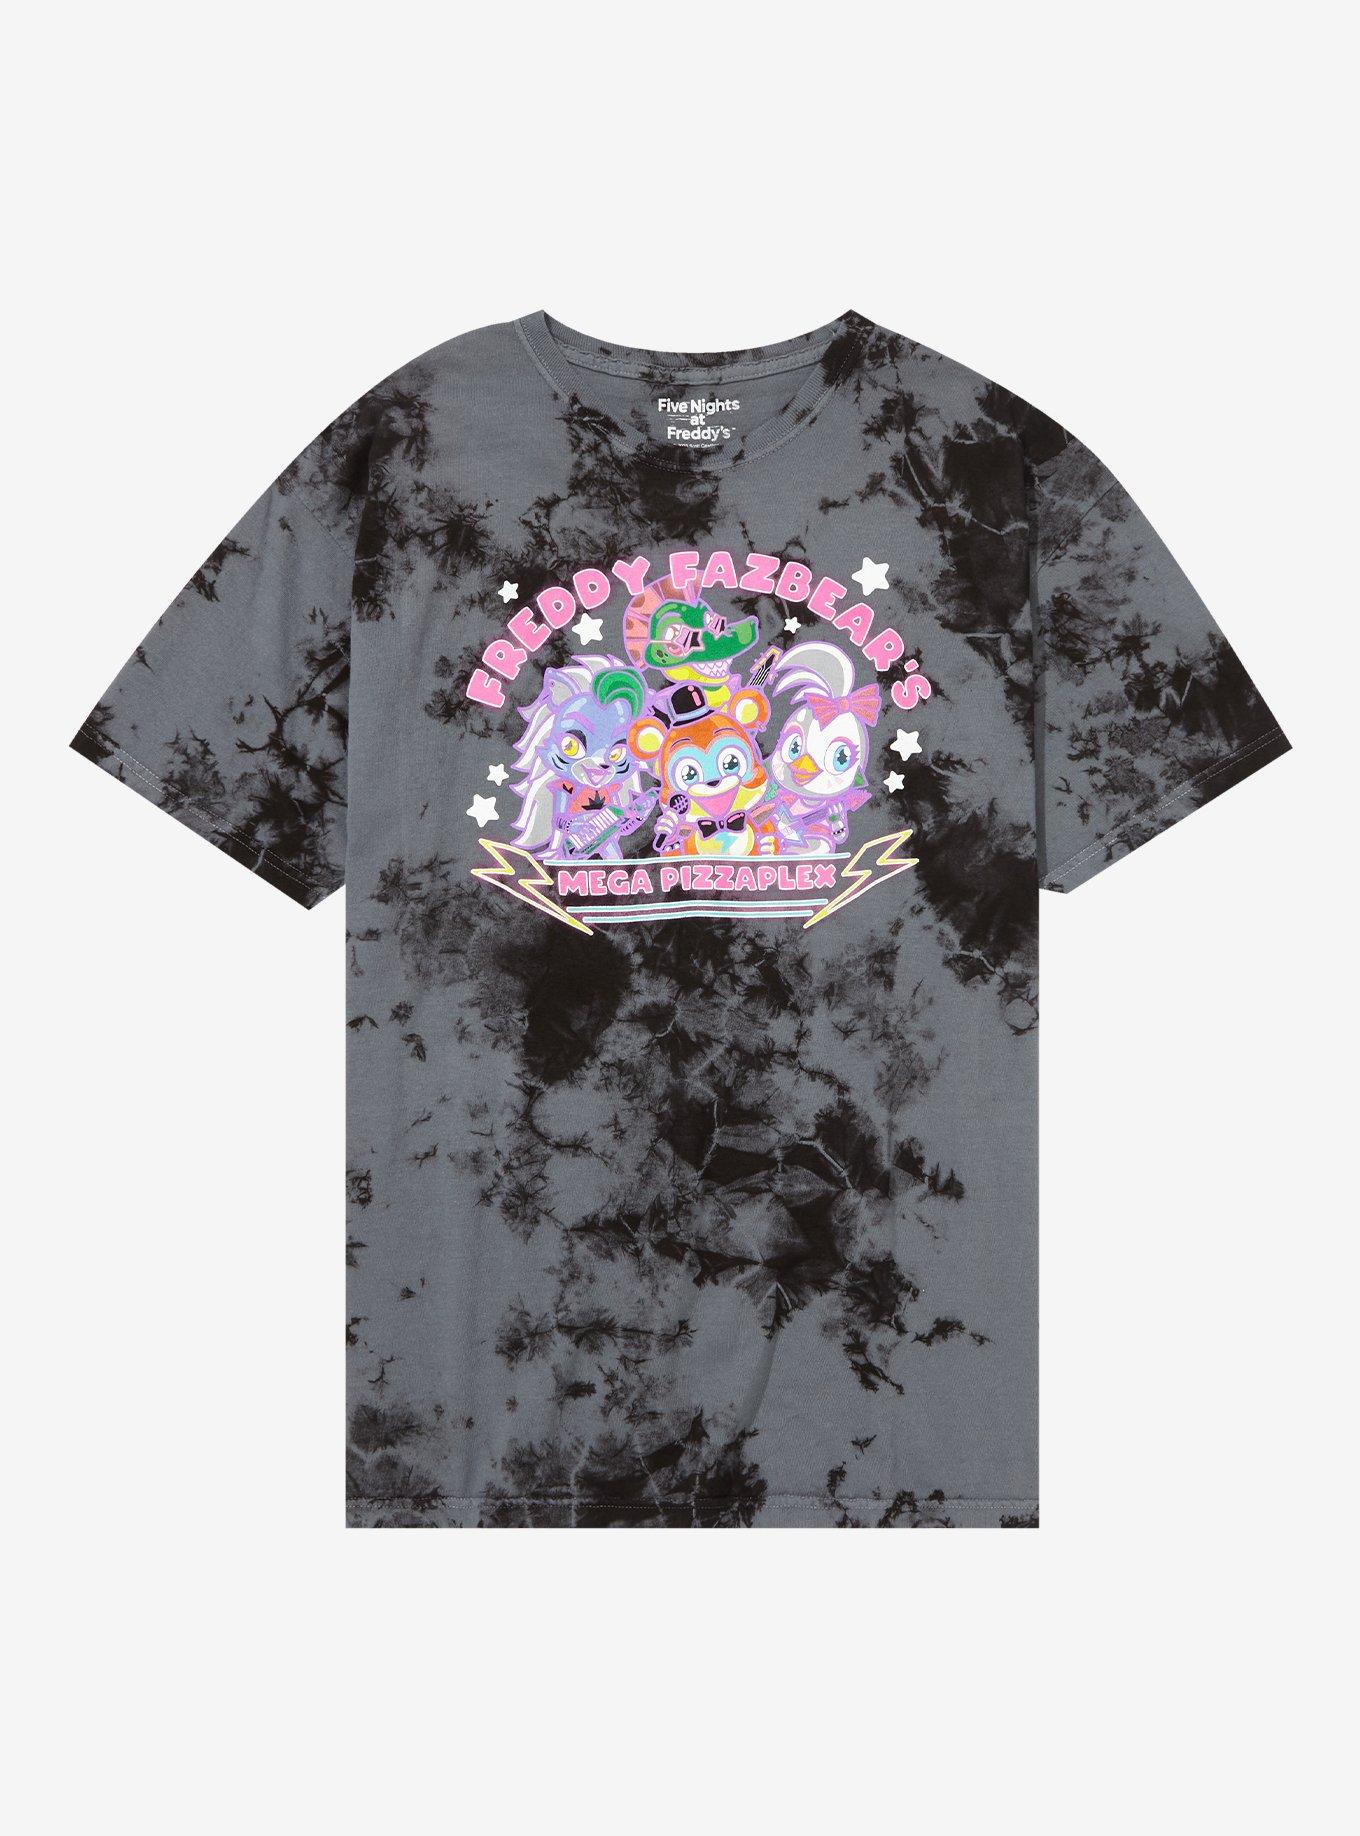 Five Nights At Freddy's Chibi Tie-Dye Boyfriend Fit Girls T-Shirt